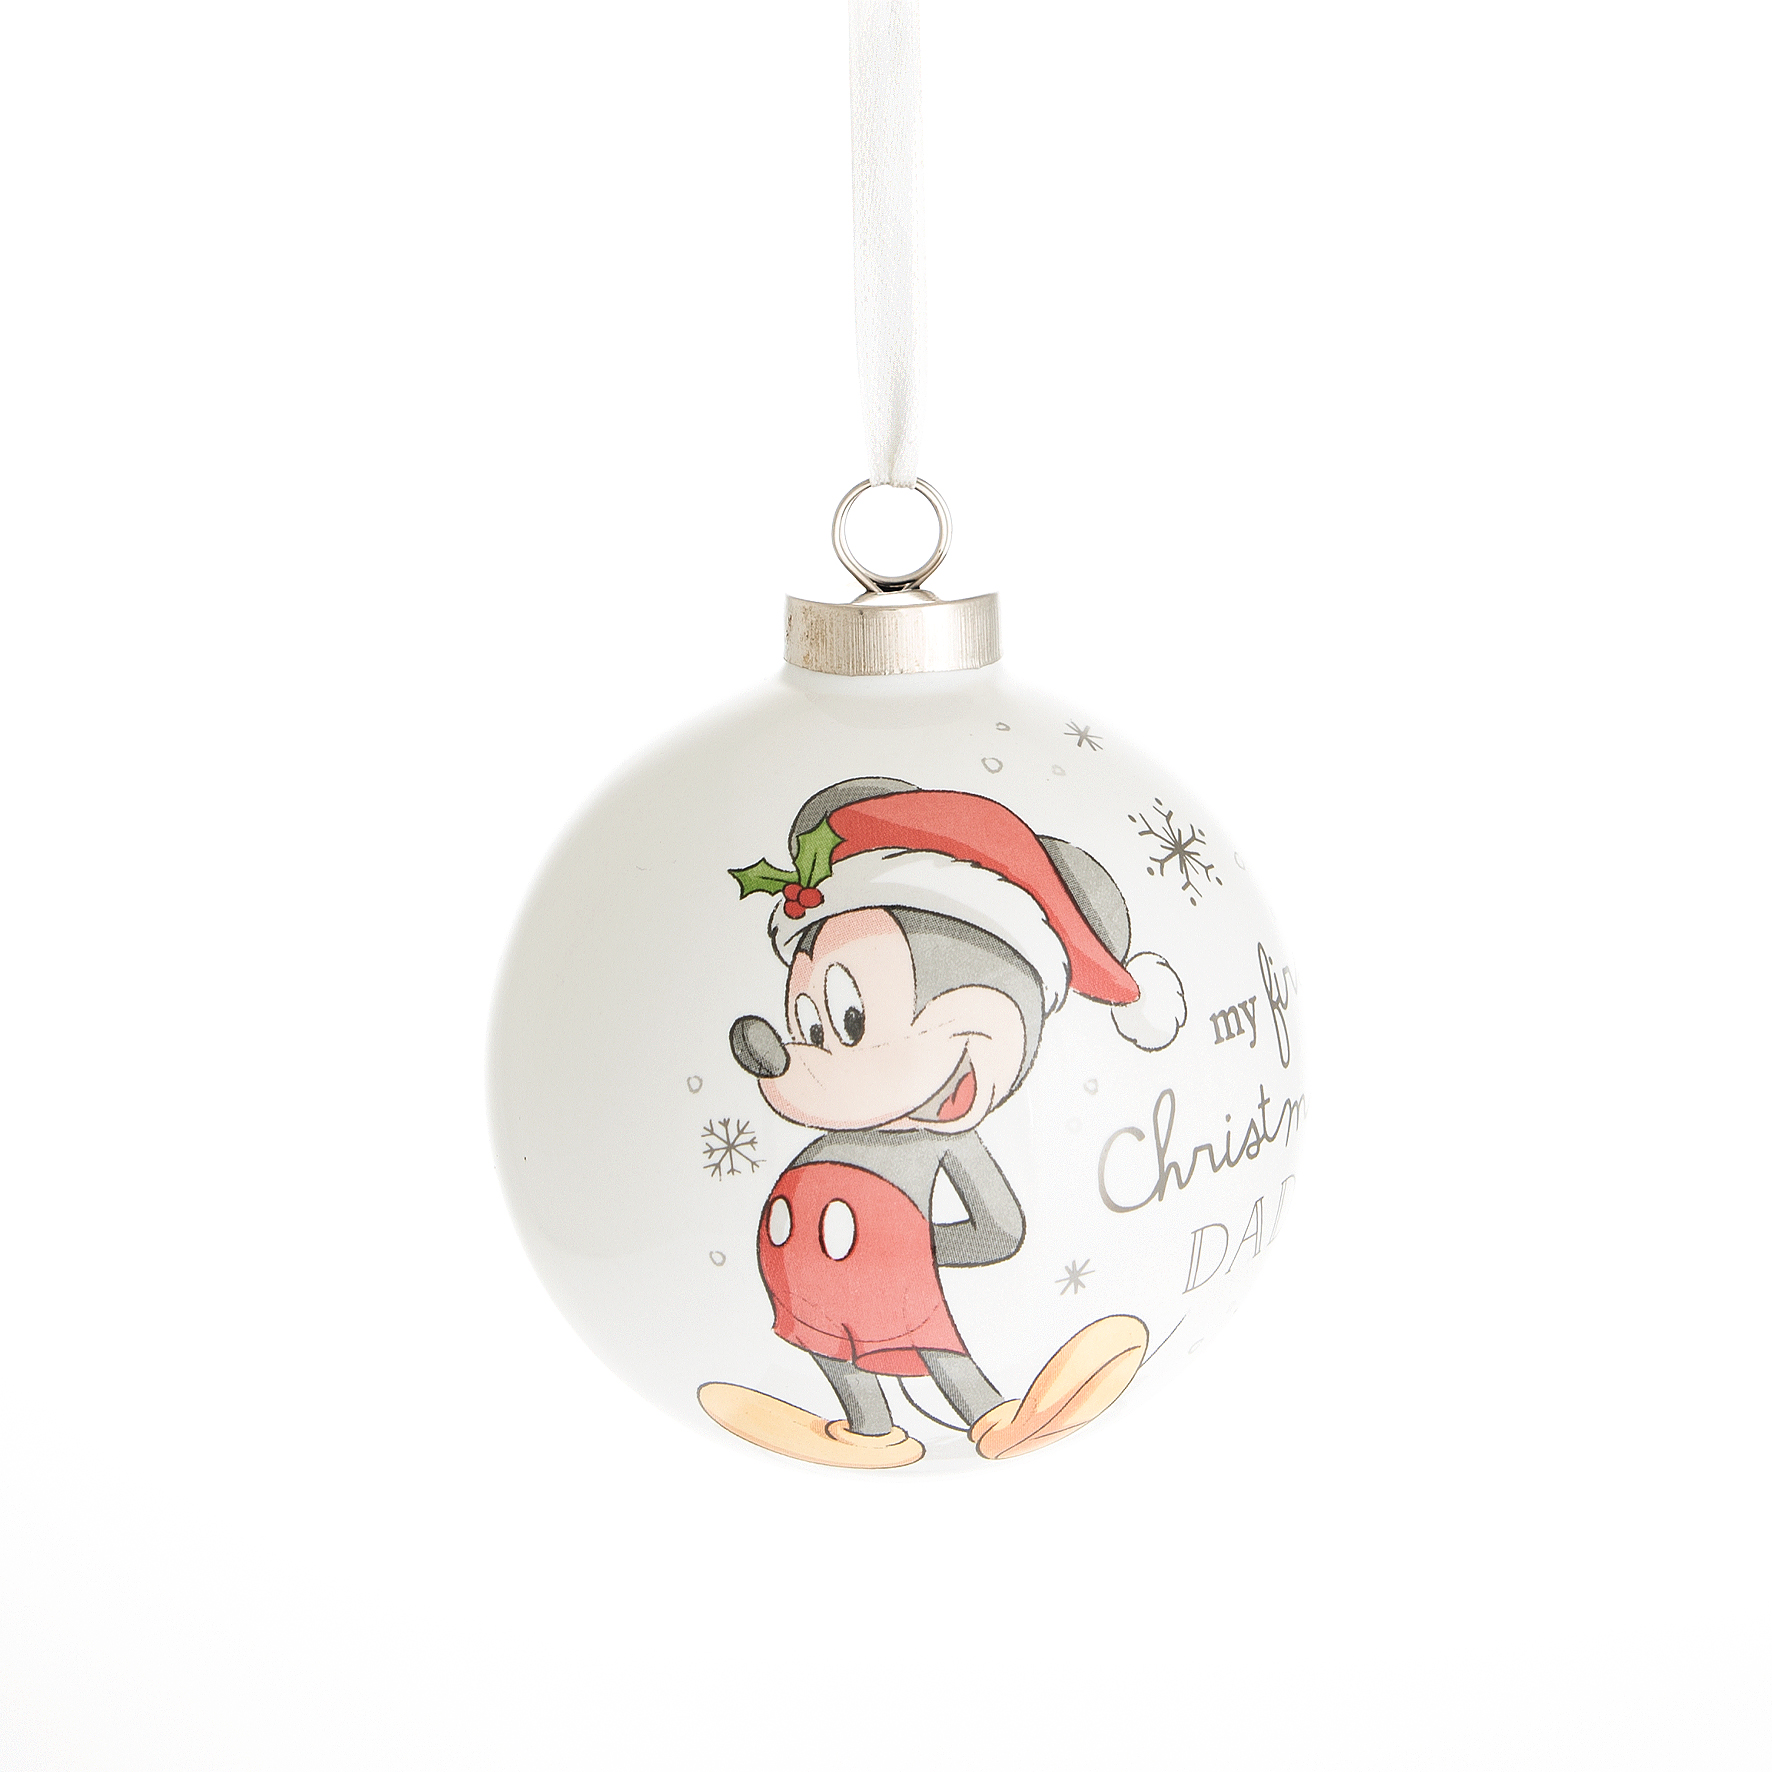 Widdop - Weihnachtskugel Keramik Micky Maus / Mickey Mouse Ornament